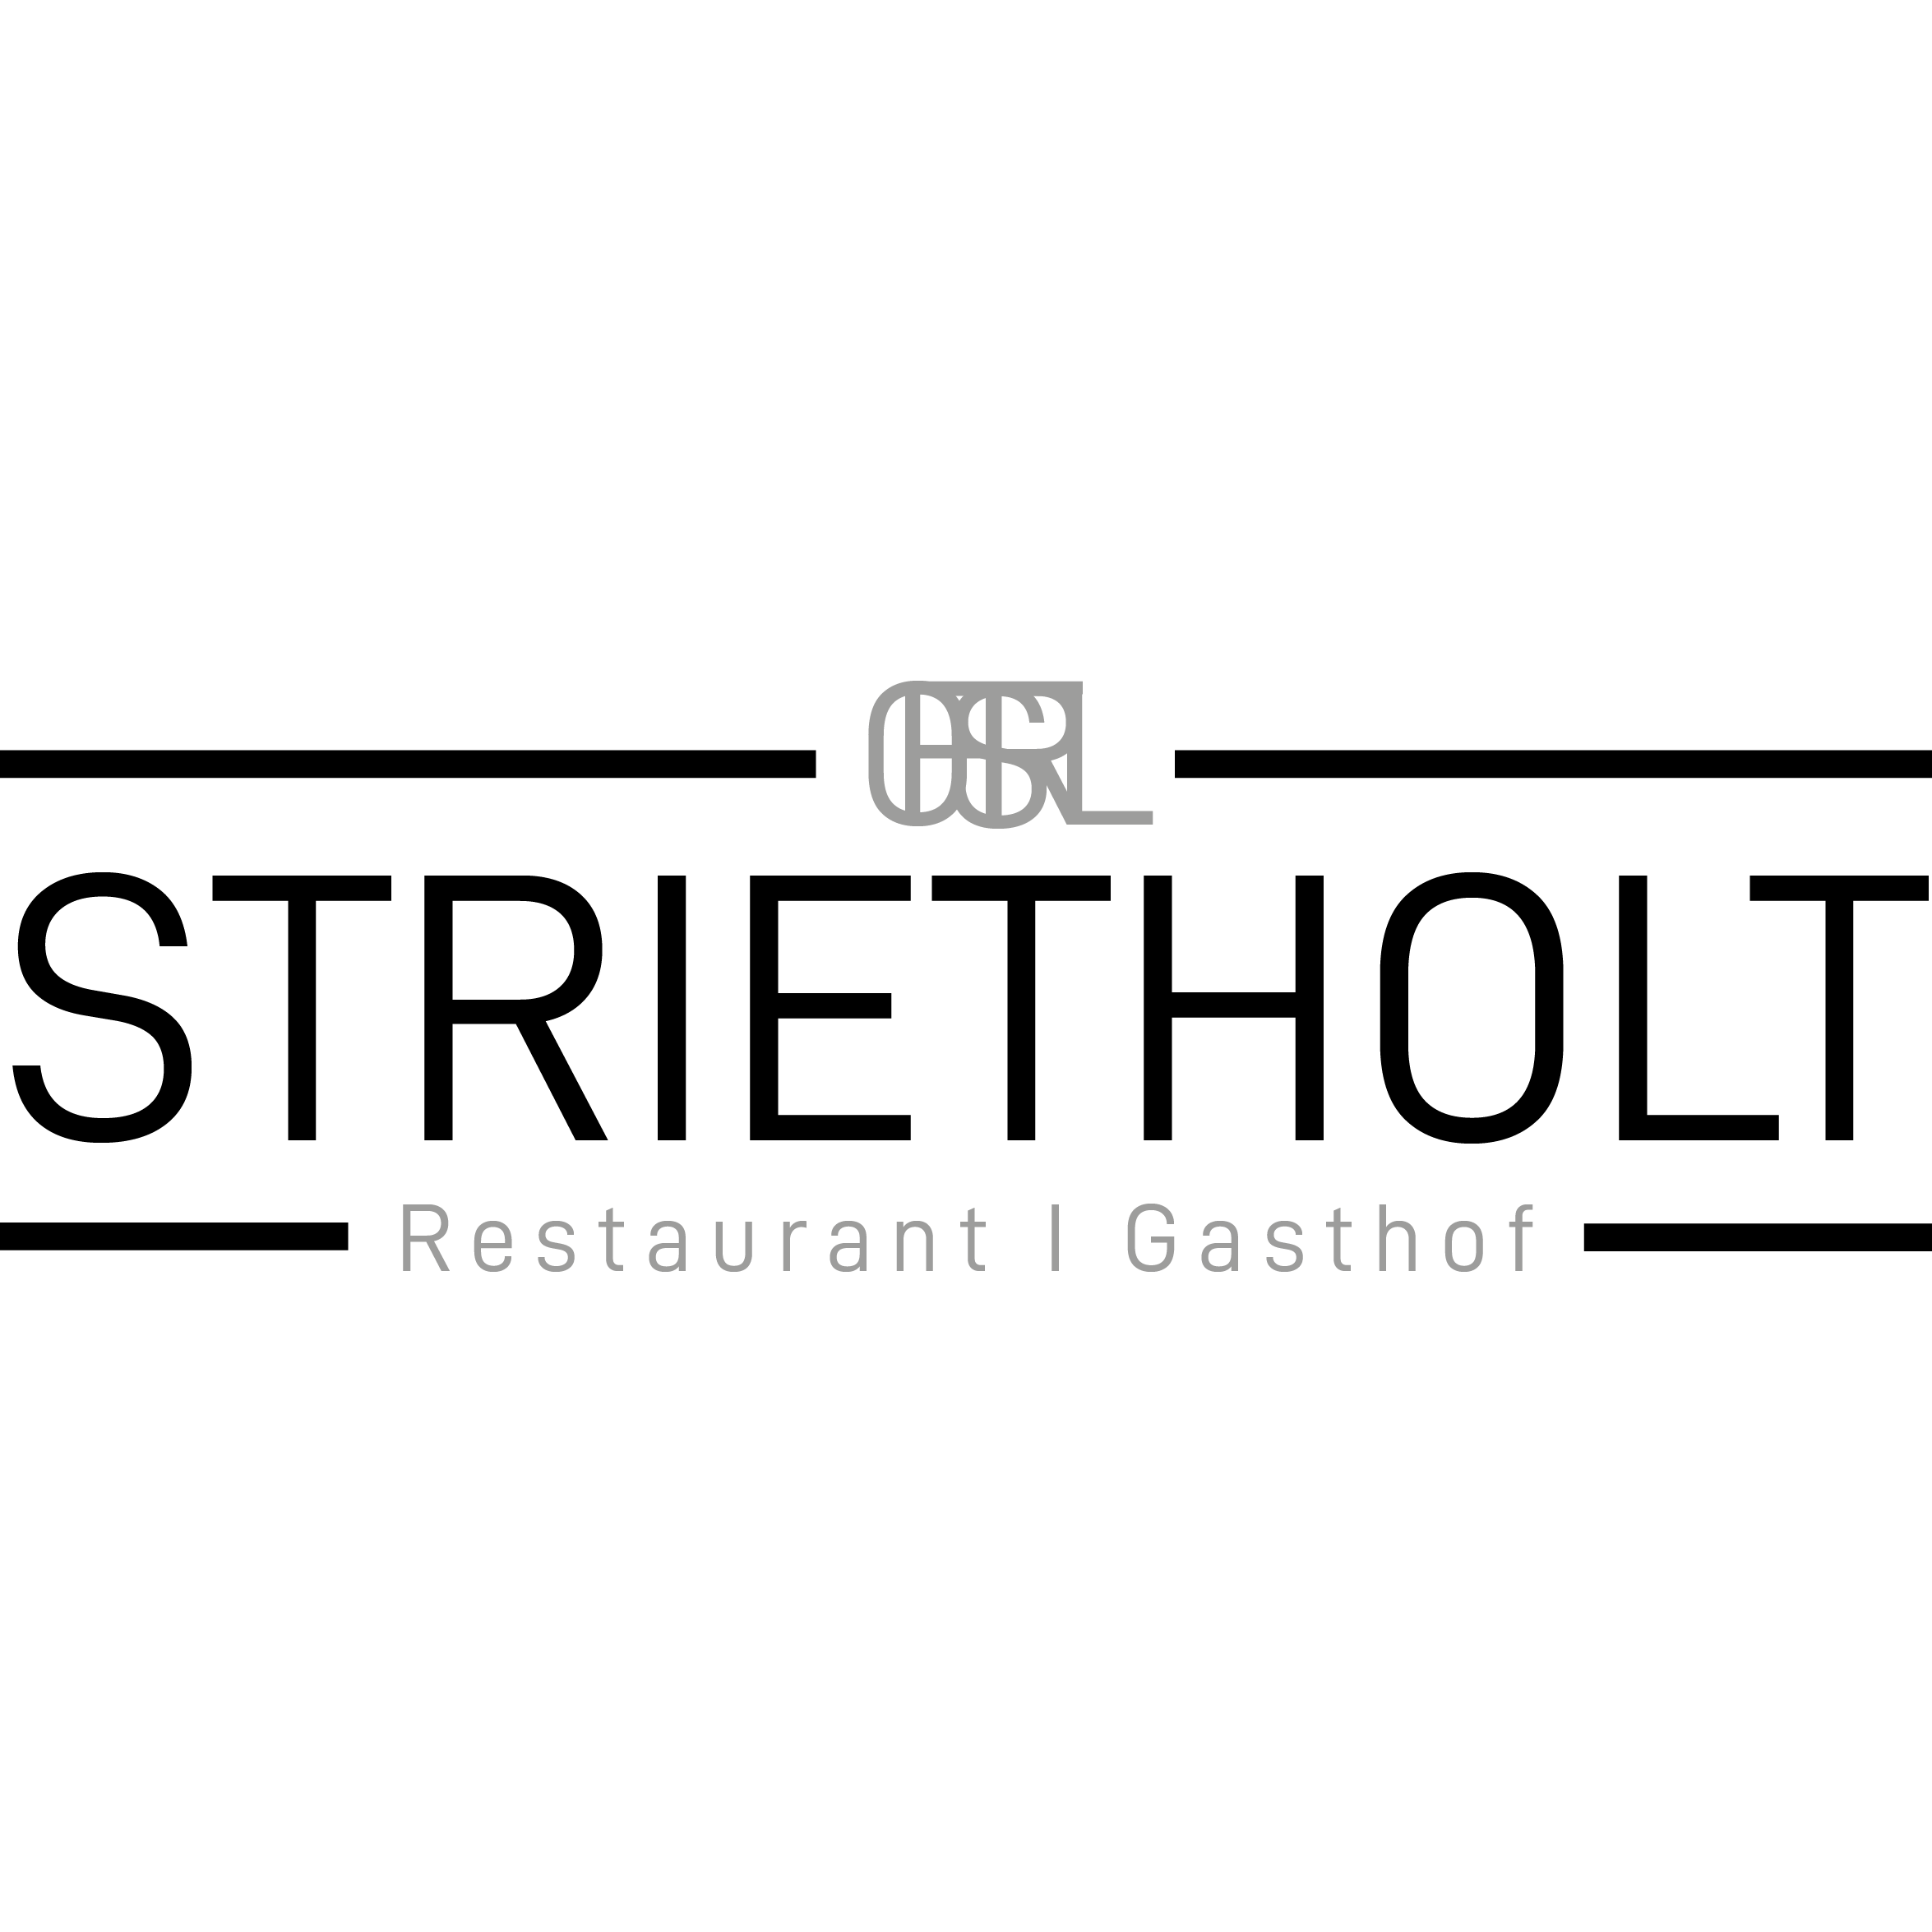 Gasthof Strietholt in Everswinkel